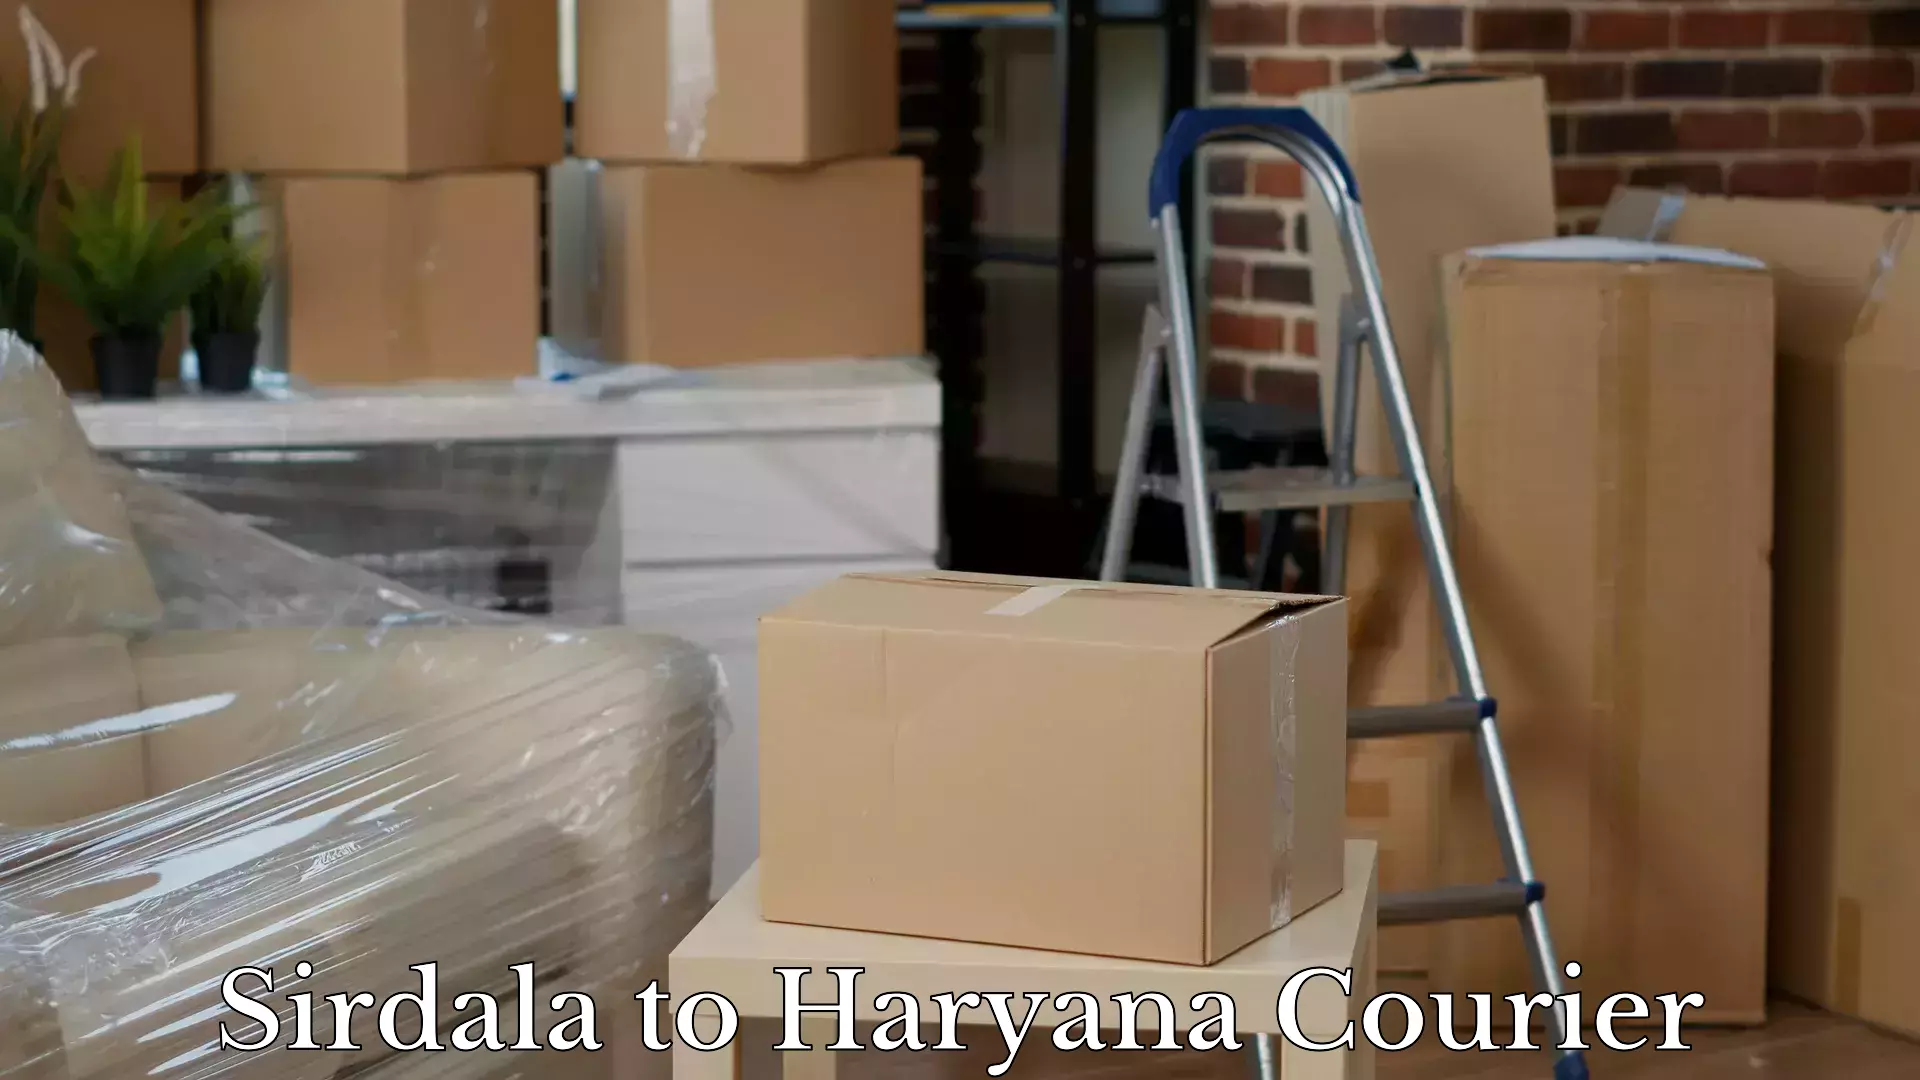 Doorstep luggage collection in Sirdala to Narwana